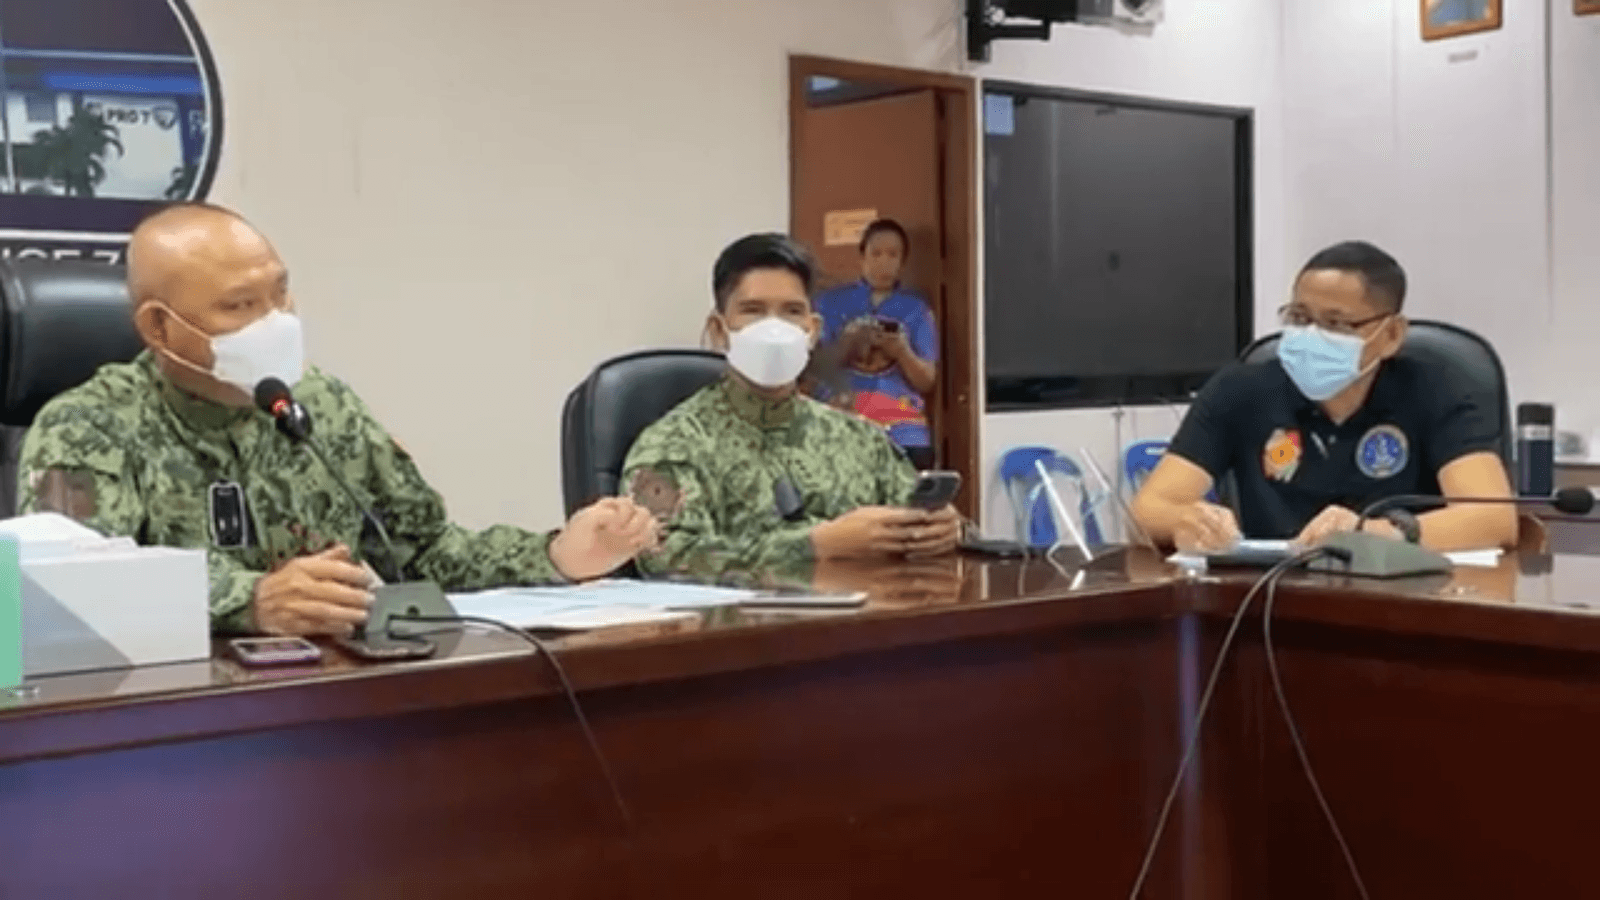 Investigator probing Cebu cops in torture case receives death threats